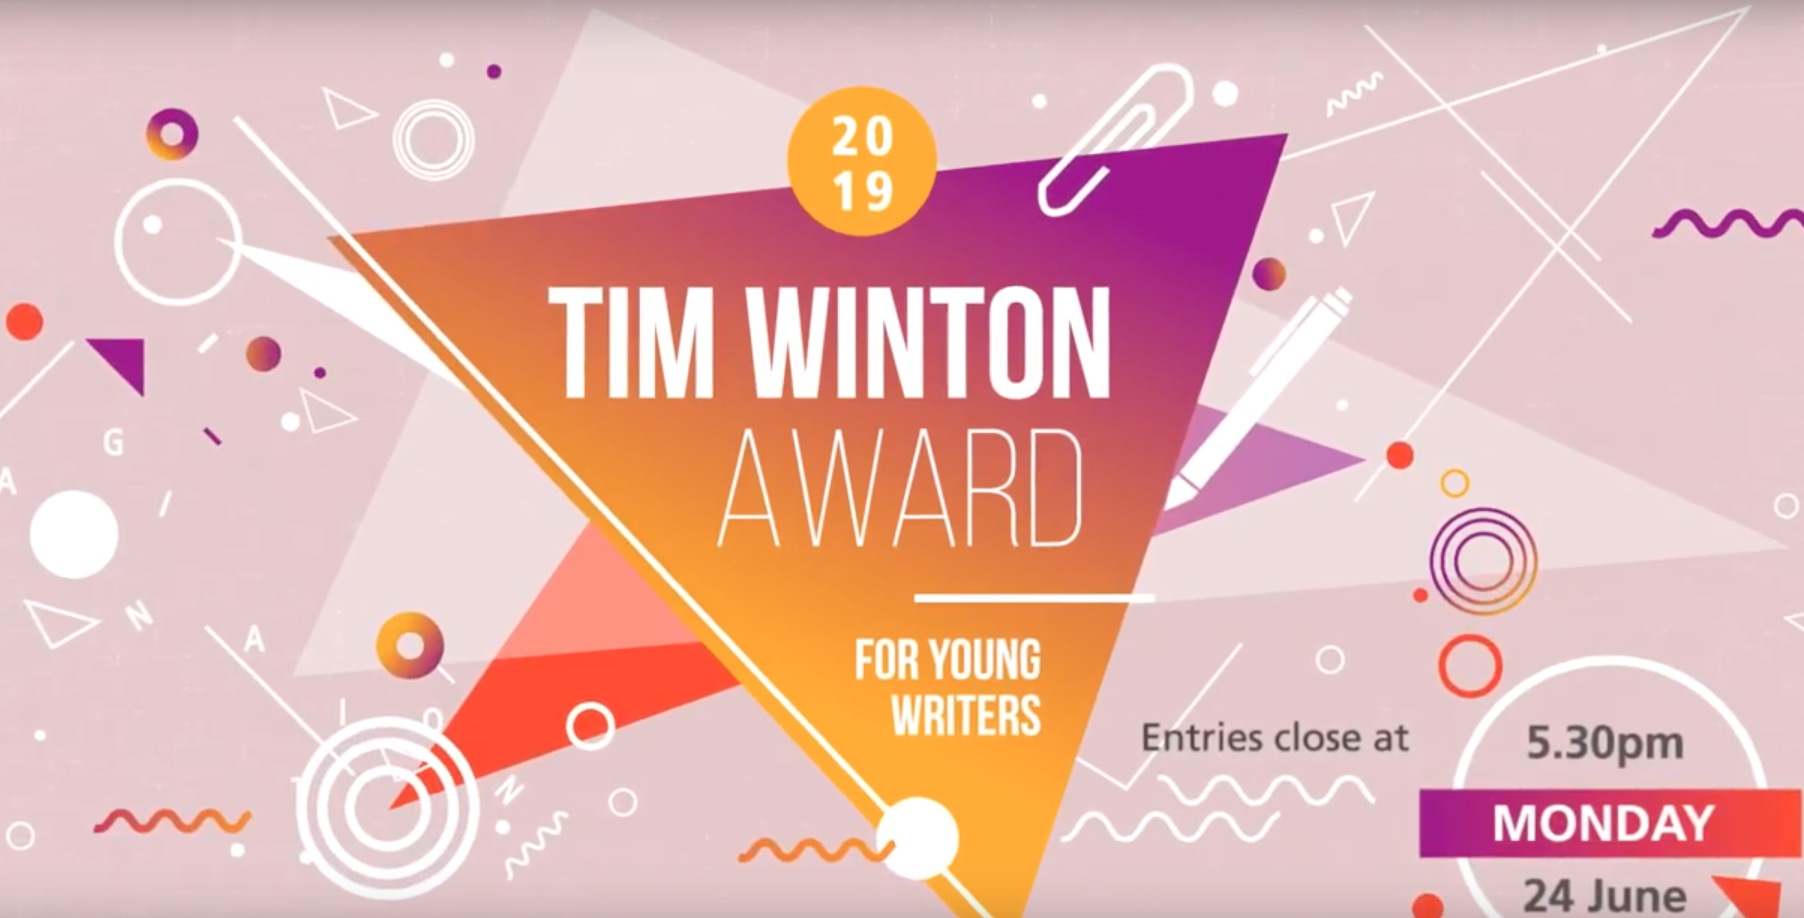 Tim Winton Award 2019